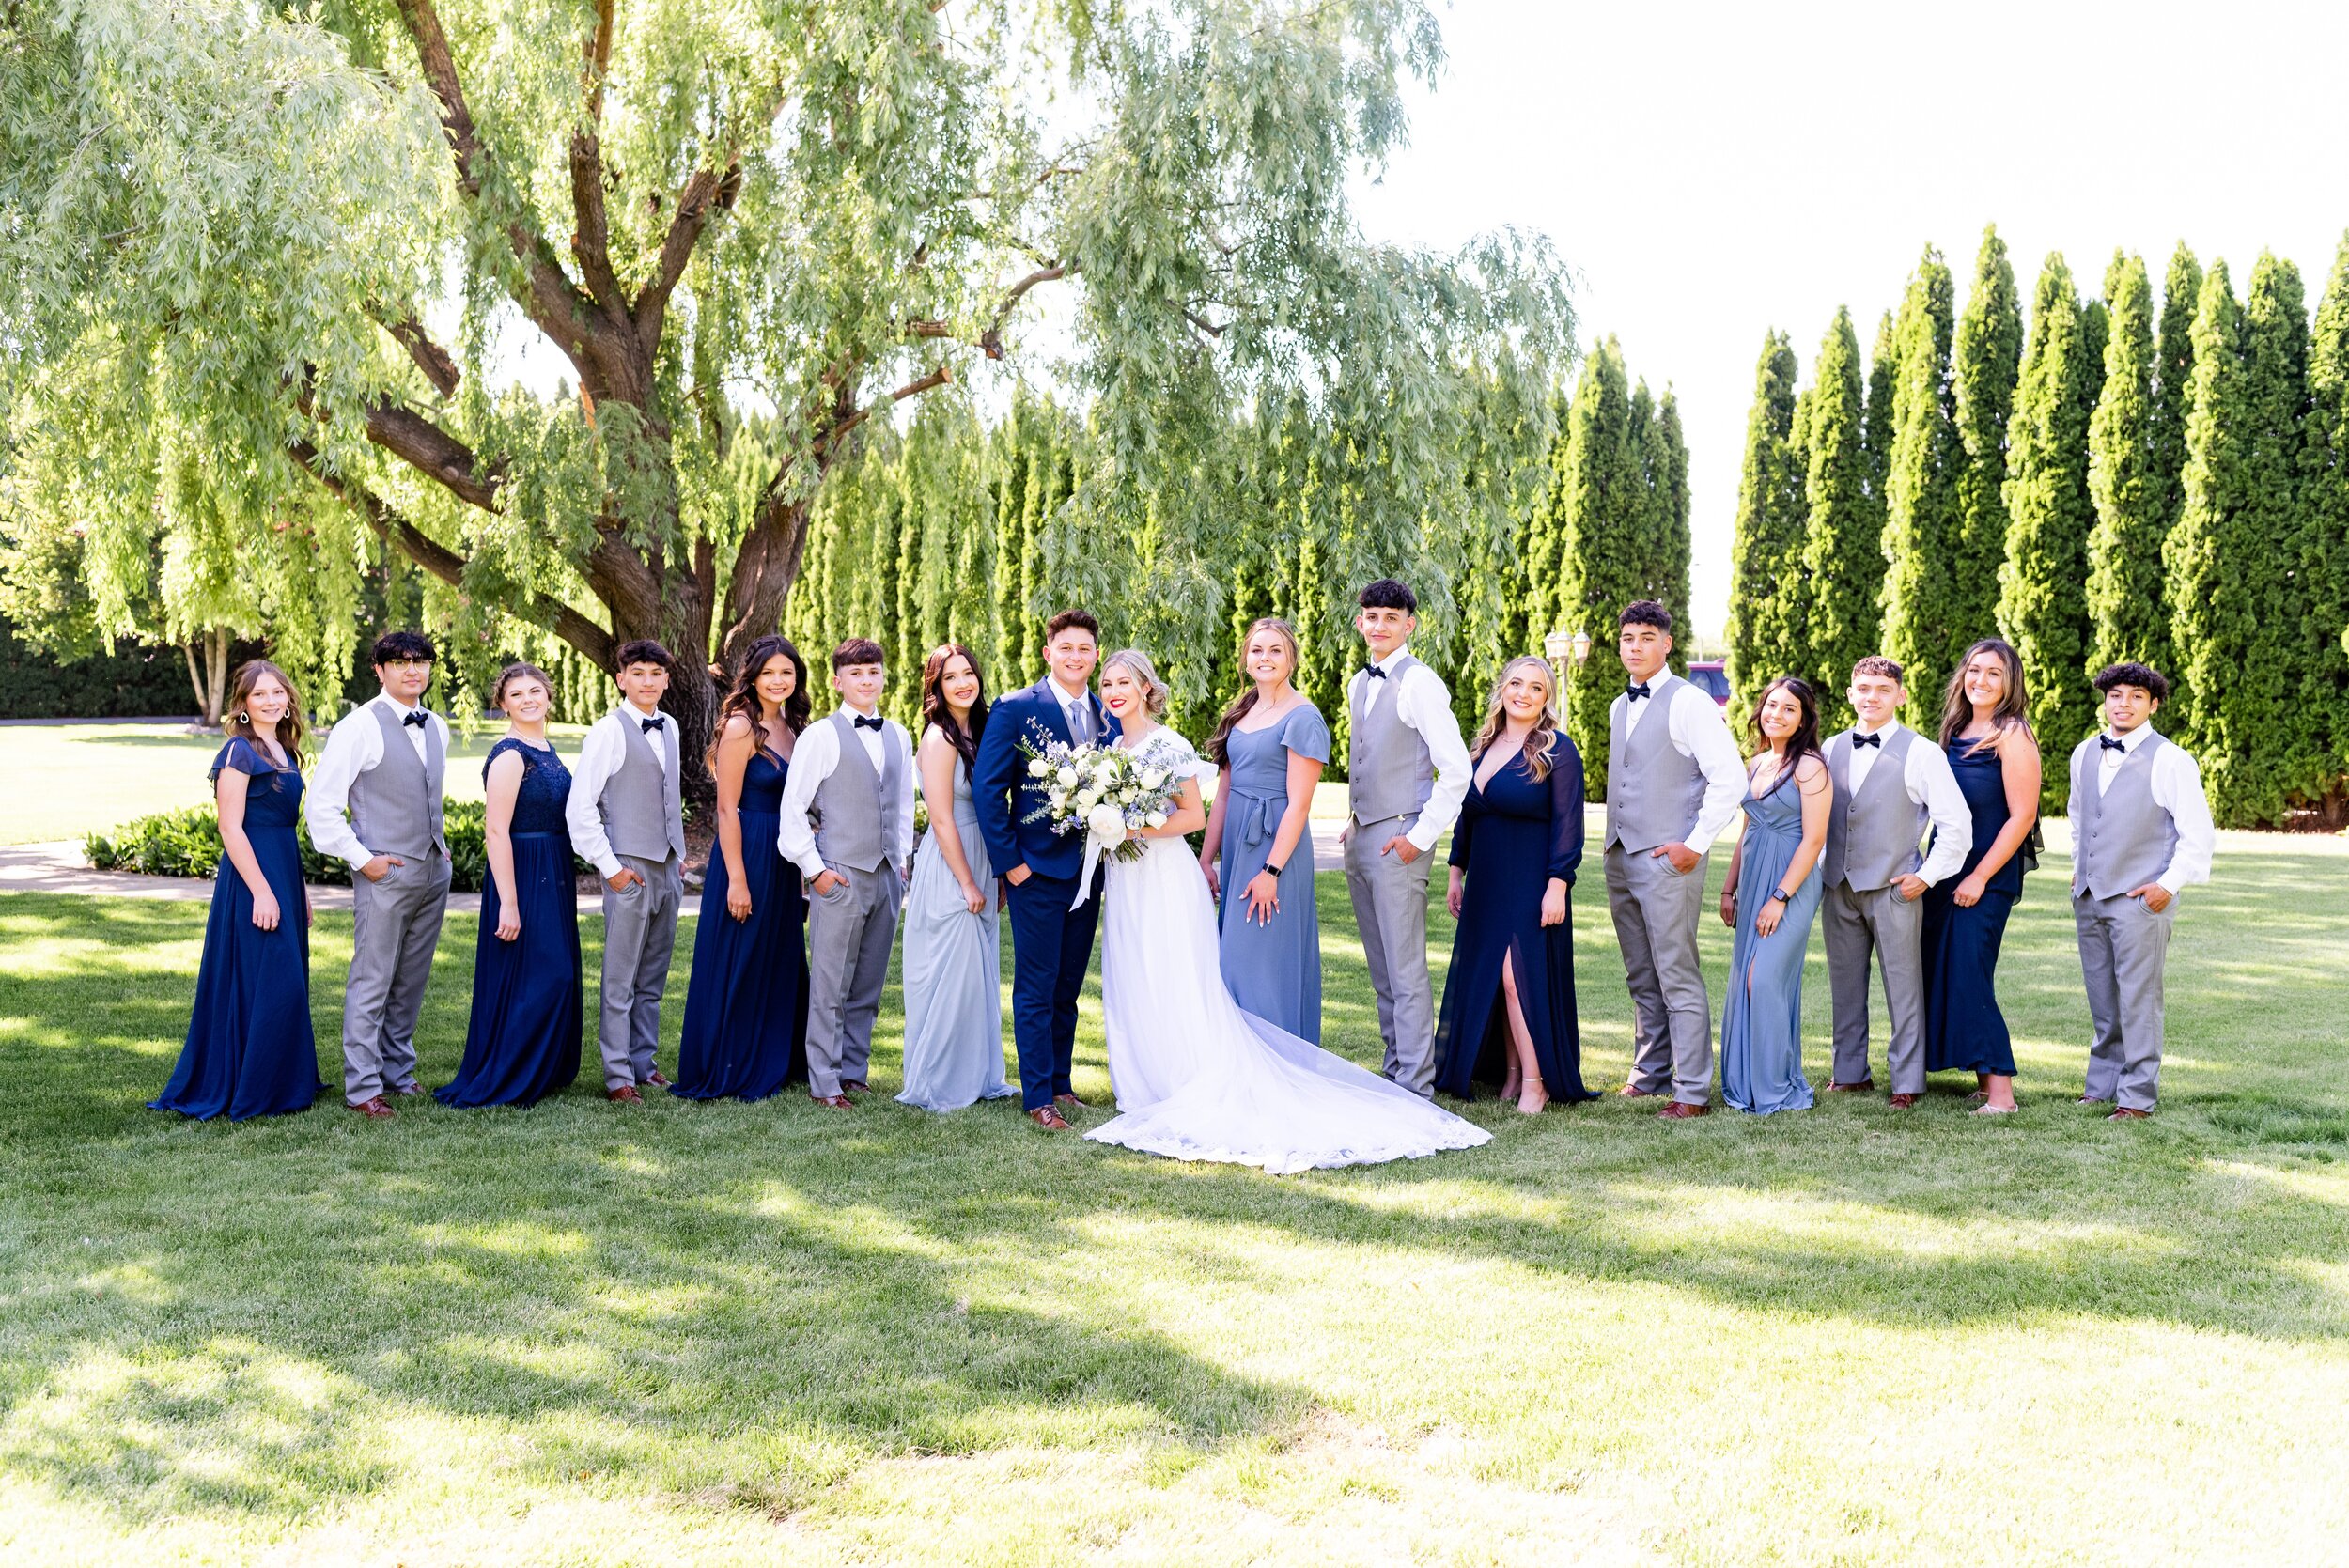 Tri Cities Pasco Promise Garden Wedding Photographer - Bridal Party Photo - Tri Cities Wedding Photographer - 509 Bride - Blue Bridesmaids Dresses 